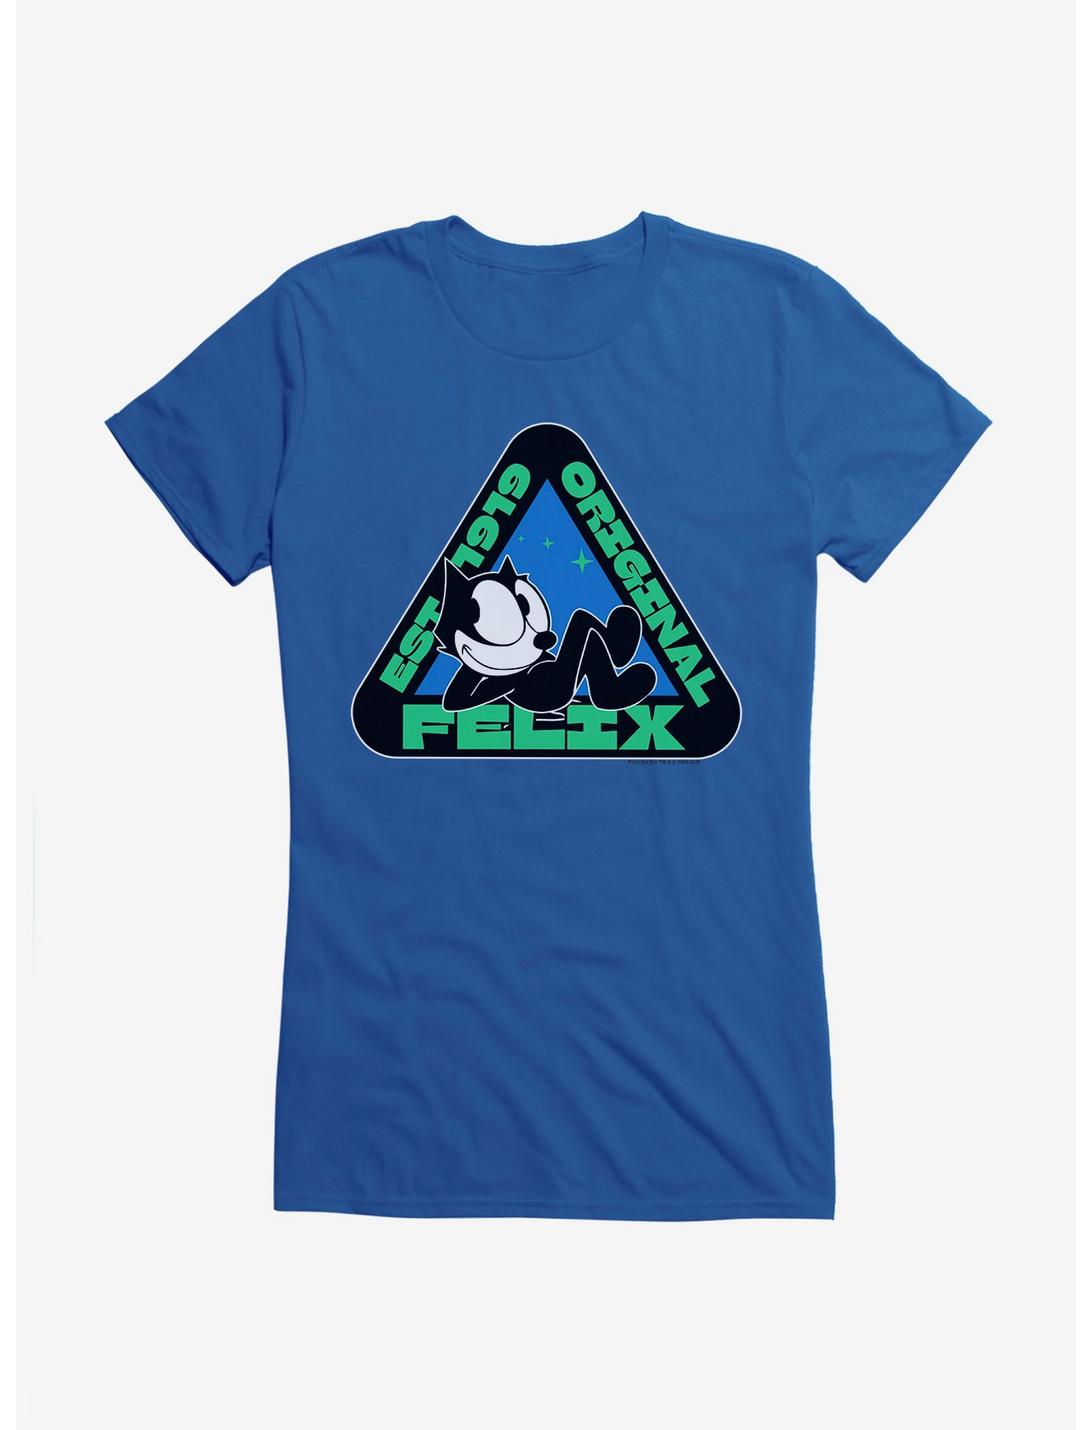 Felix The Cat Original Triangular Graphic Girls T-Shirt, ROYAL, hi-res